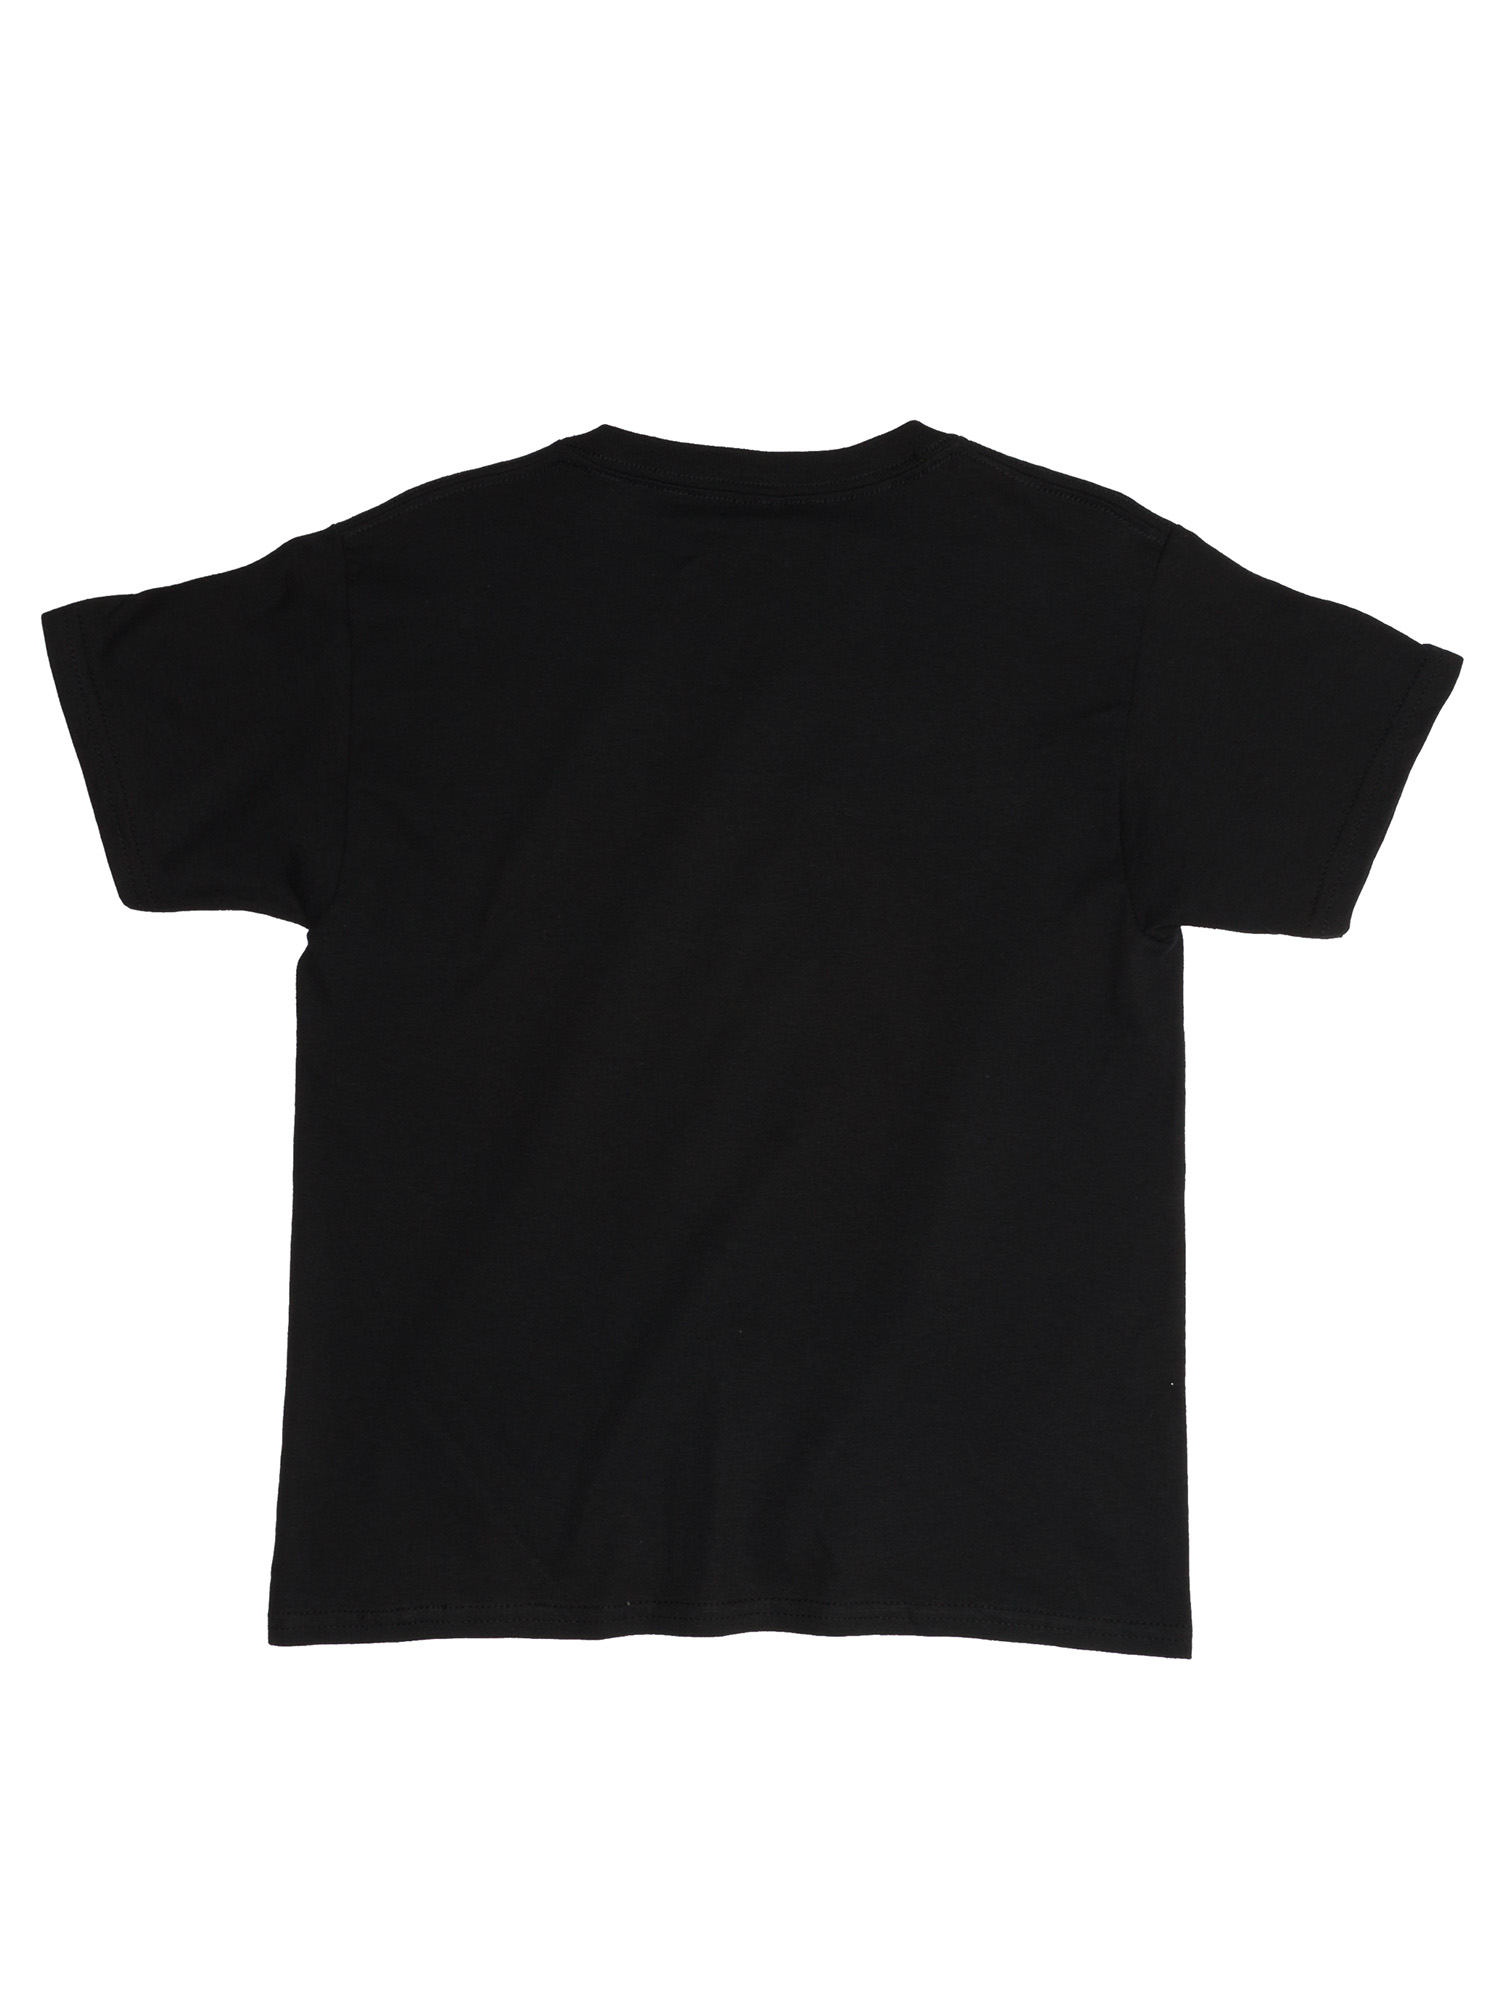 Star Wars Assorted Two Pack Short Sleeve T-Shirt Bundle (Little Boys & Big Boys) - image 4 of 6